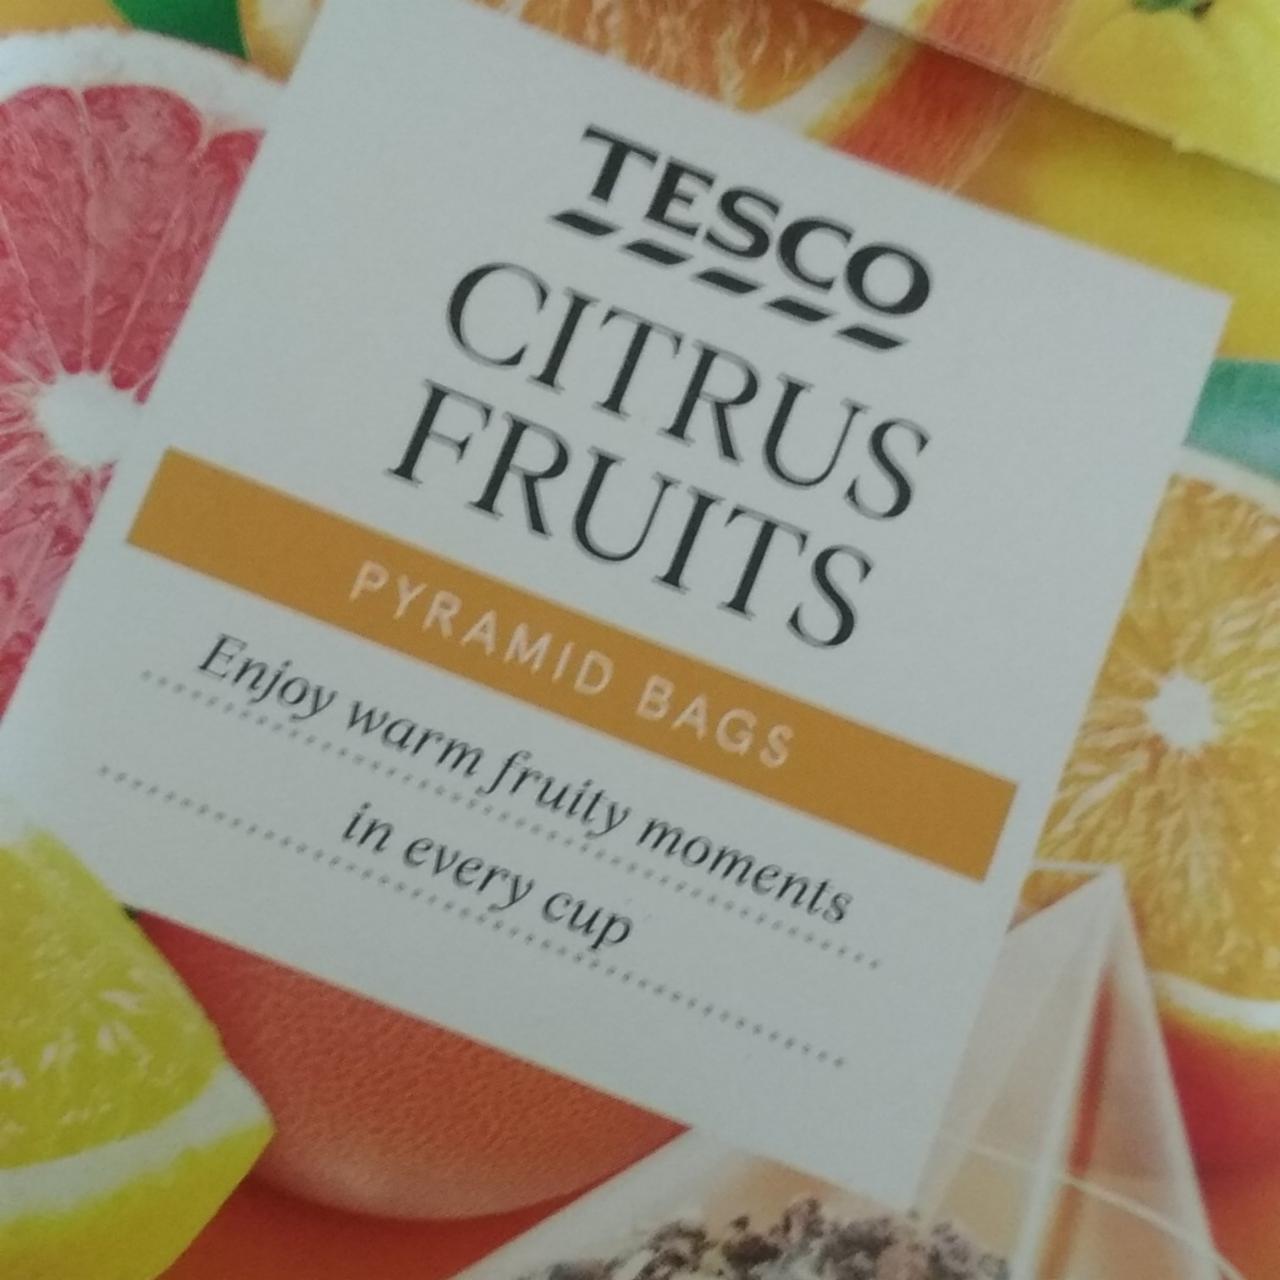 Fotografie - Citrus Fruits pyramid bags Tesco